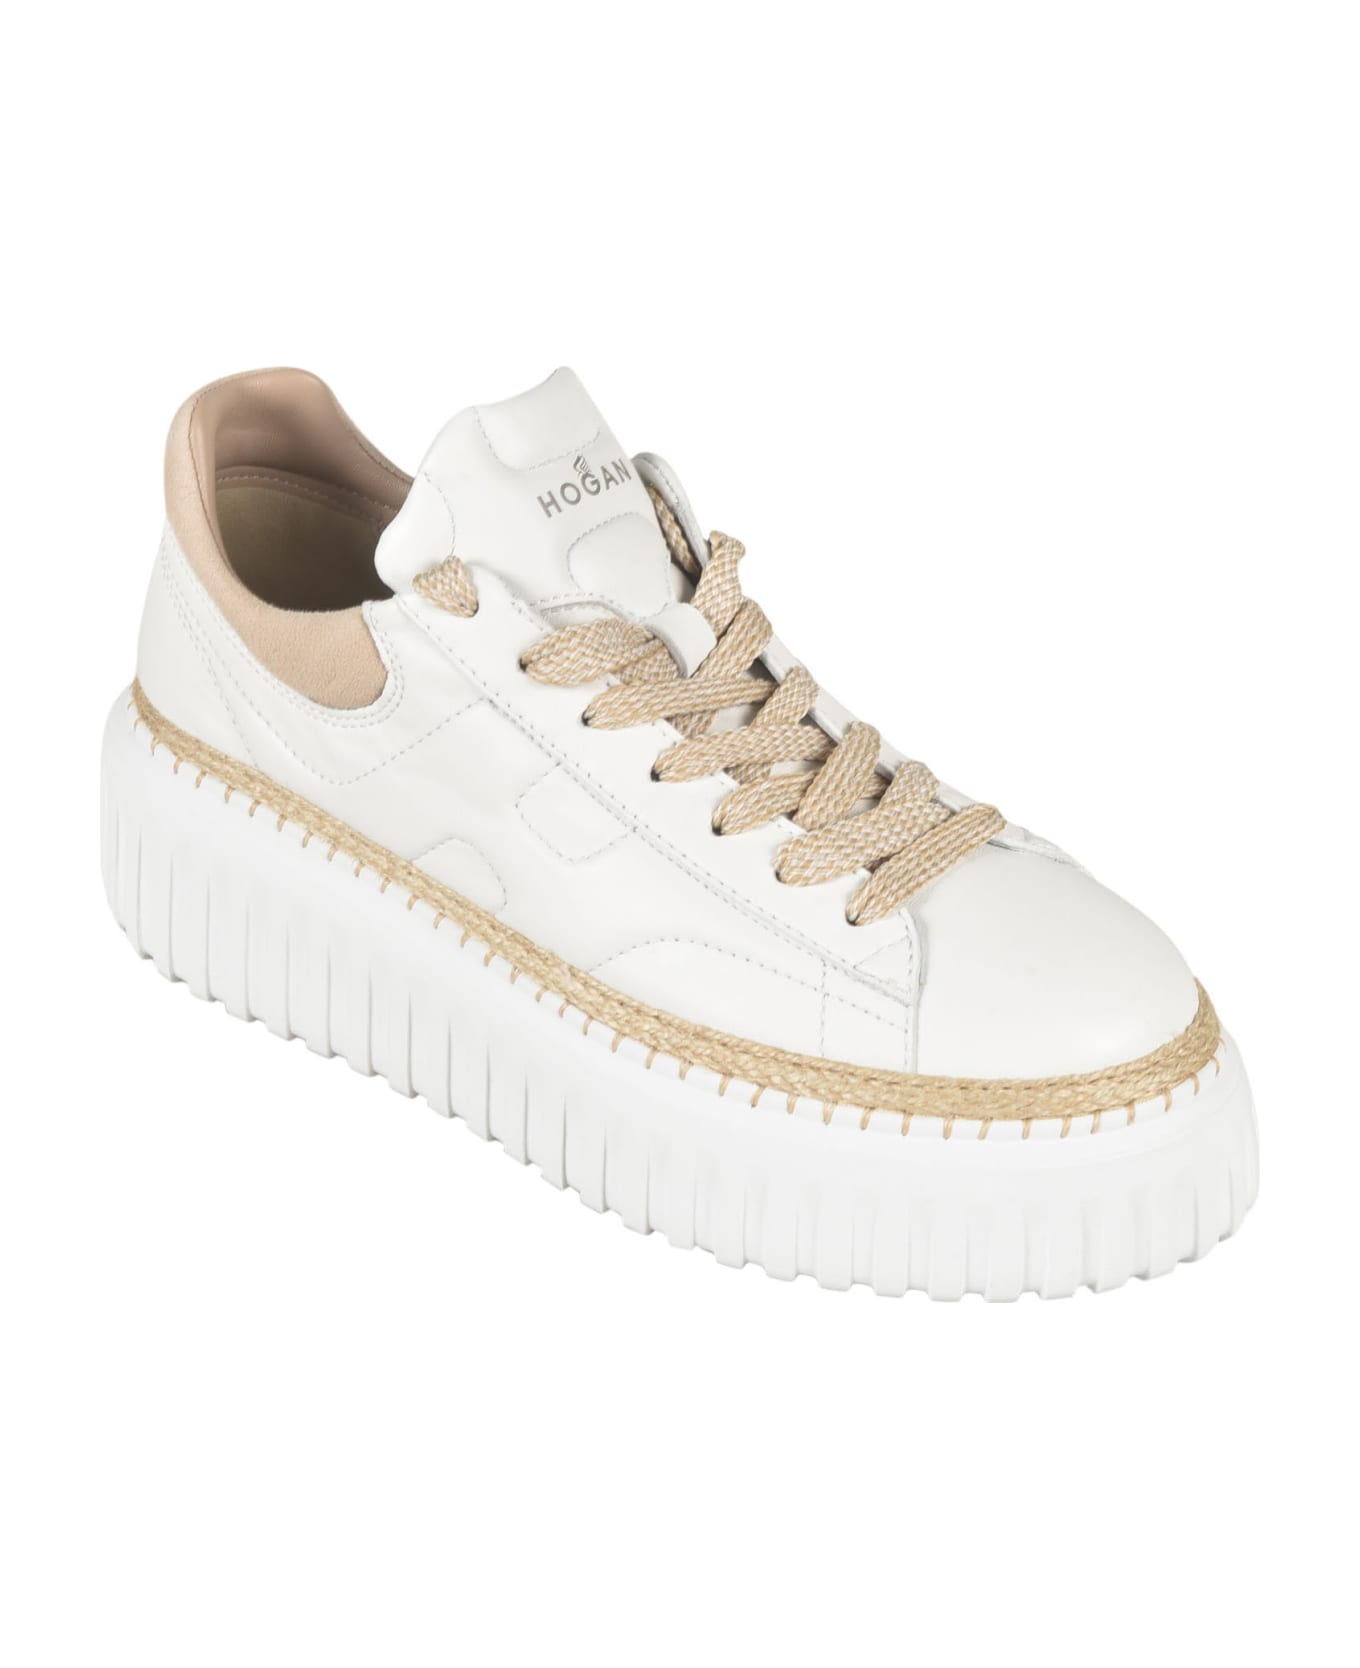 Hogan H659 Sneakers - White